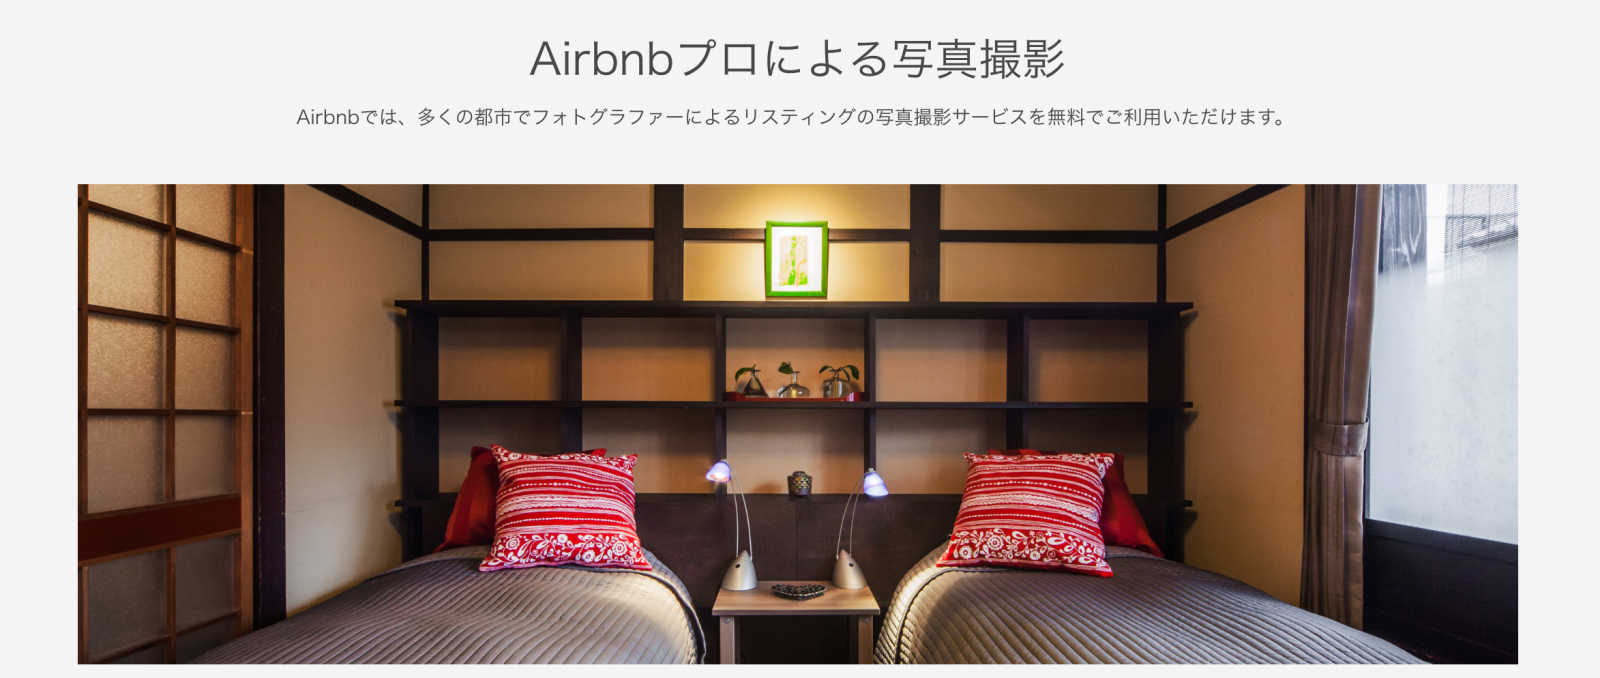 airbnb_photo